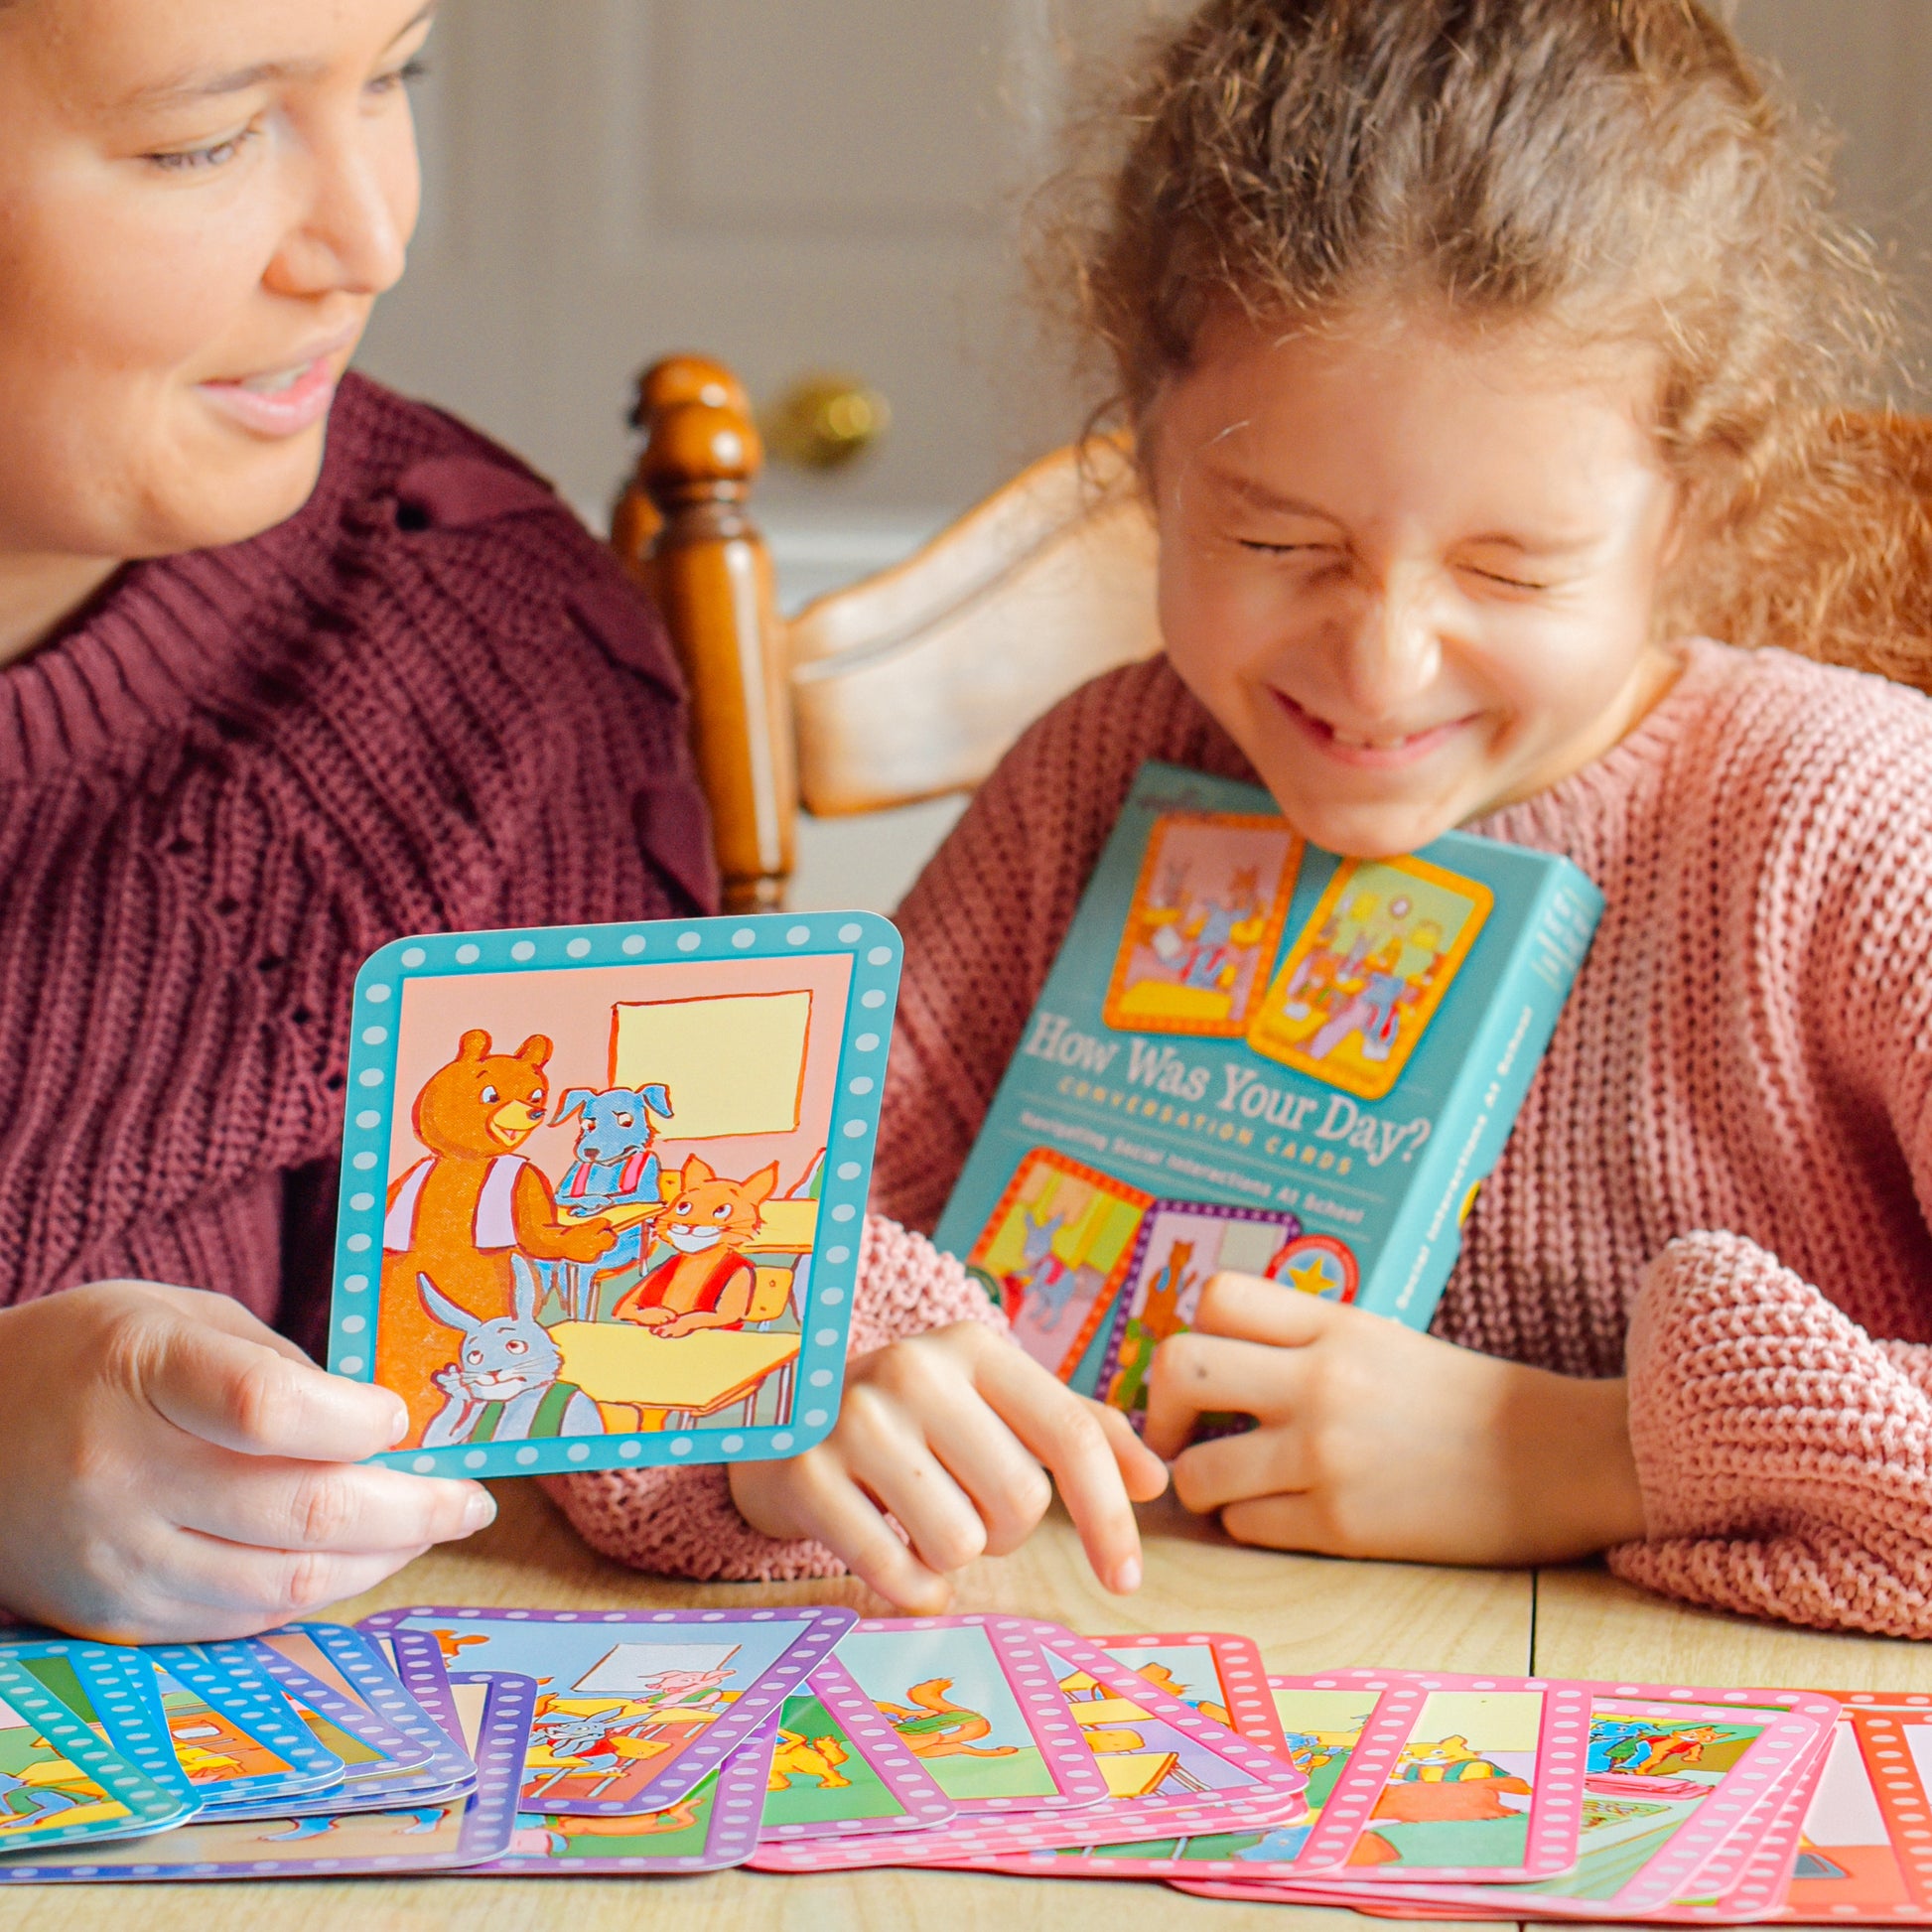 How Was Your Day? Conversation Cards - Social Emotional Development for Kindergarten Kids 5+ | eeBoo